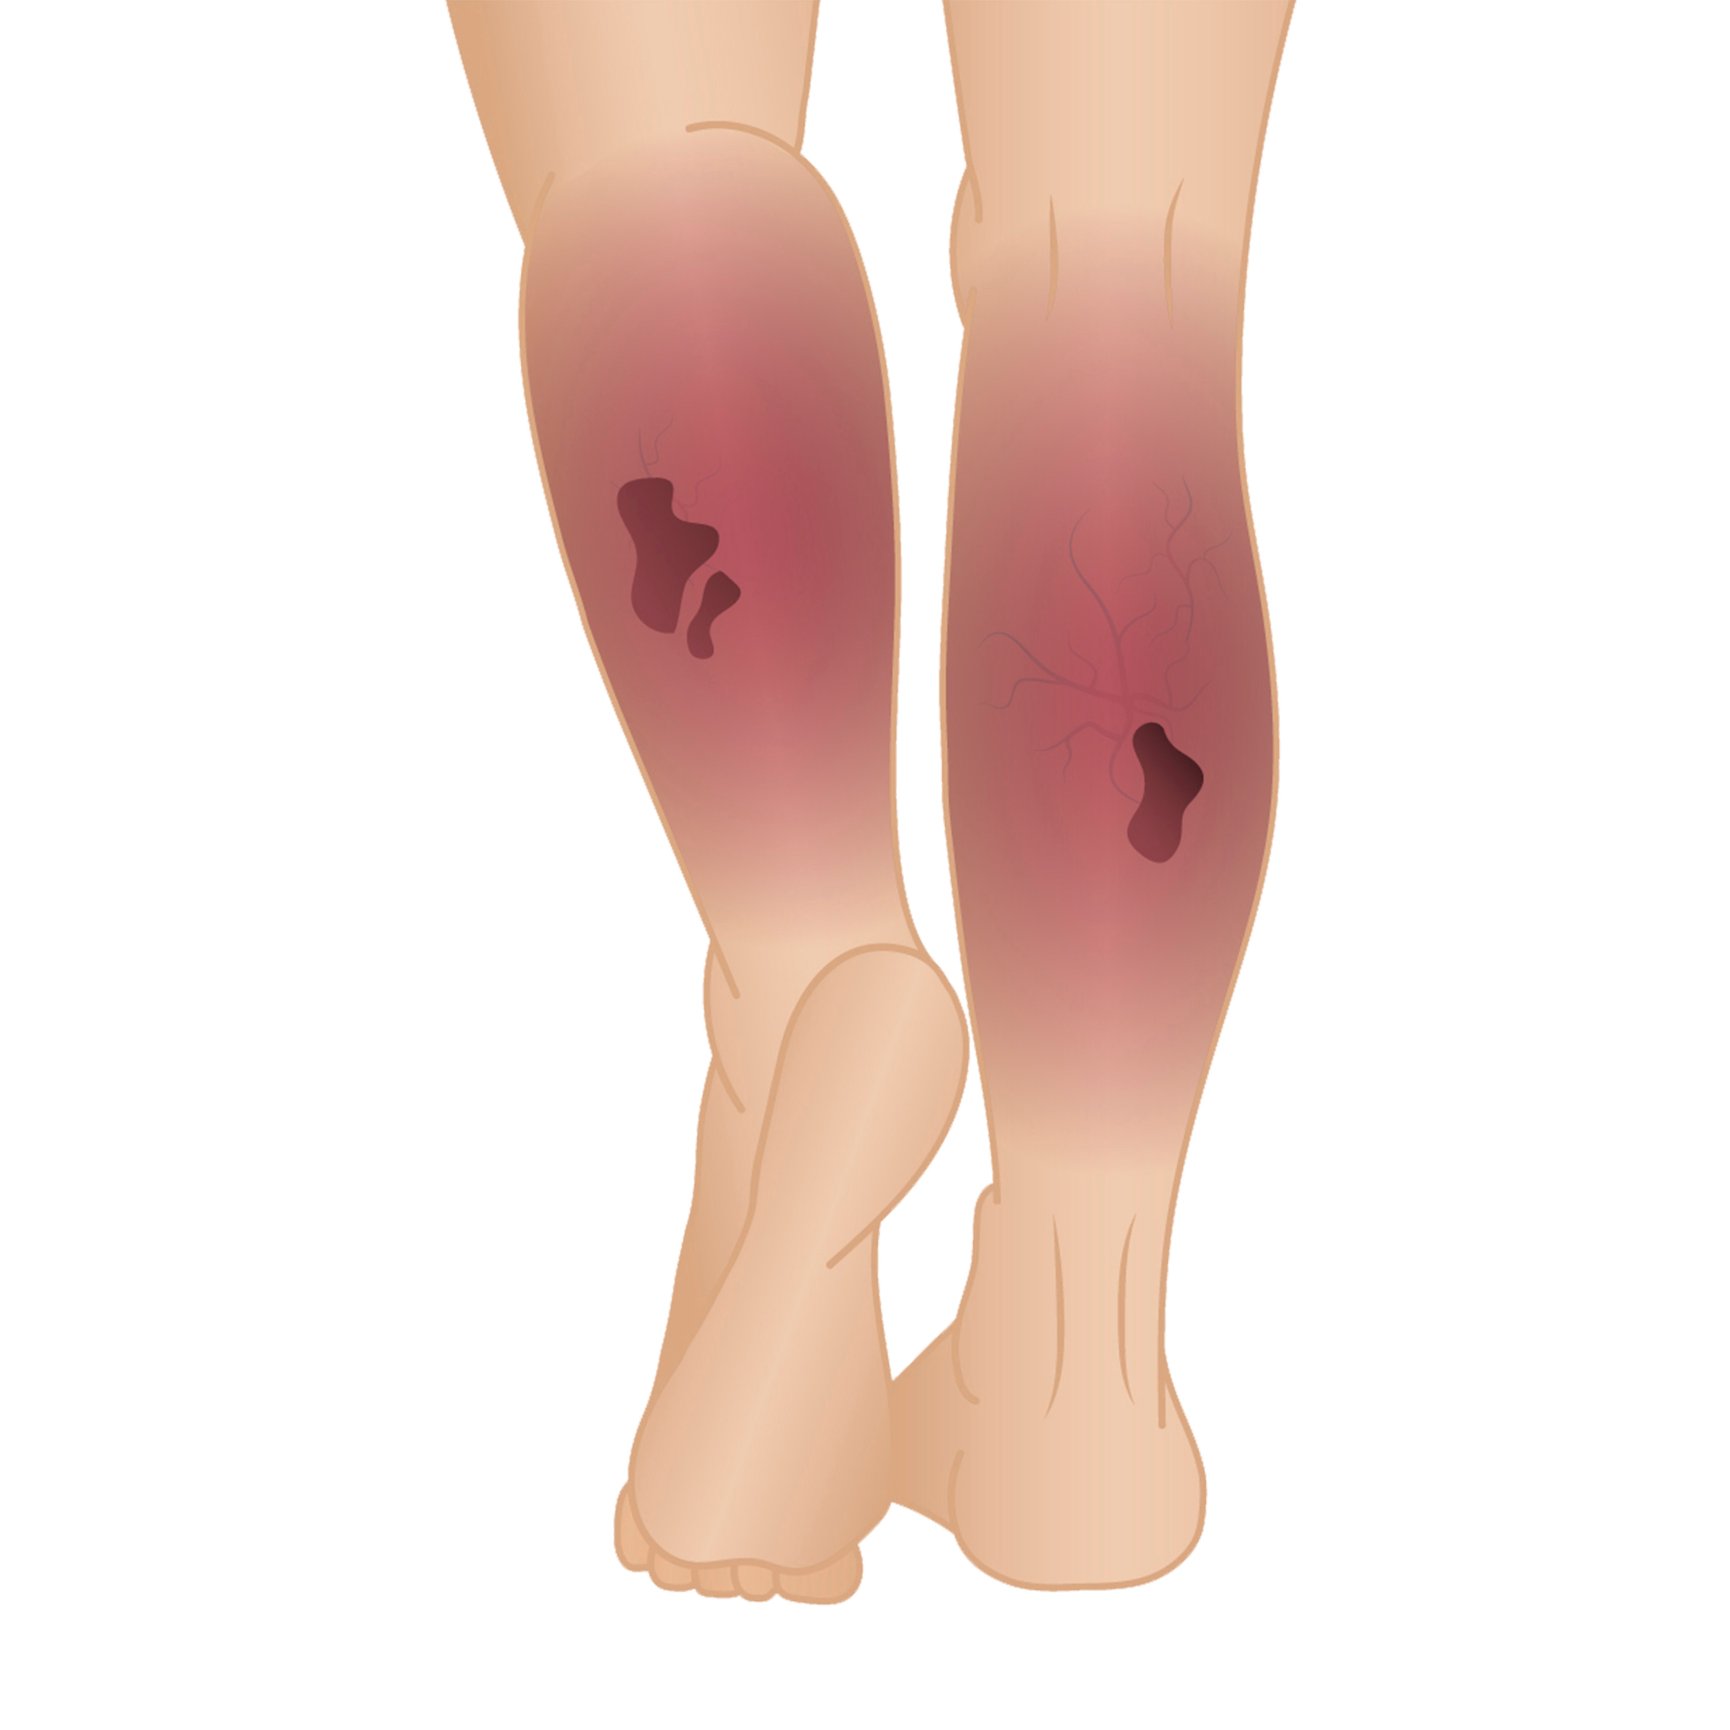 deep vein thrombosis behind knee